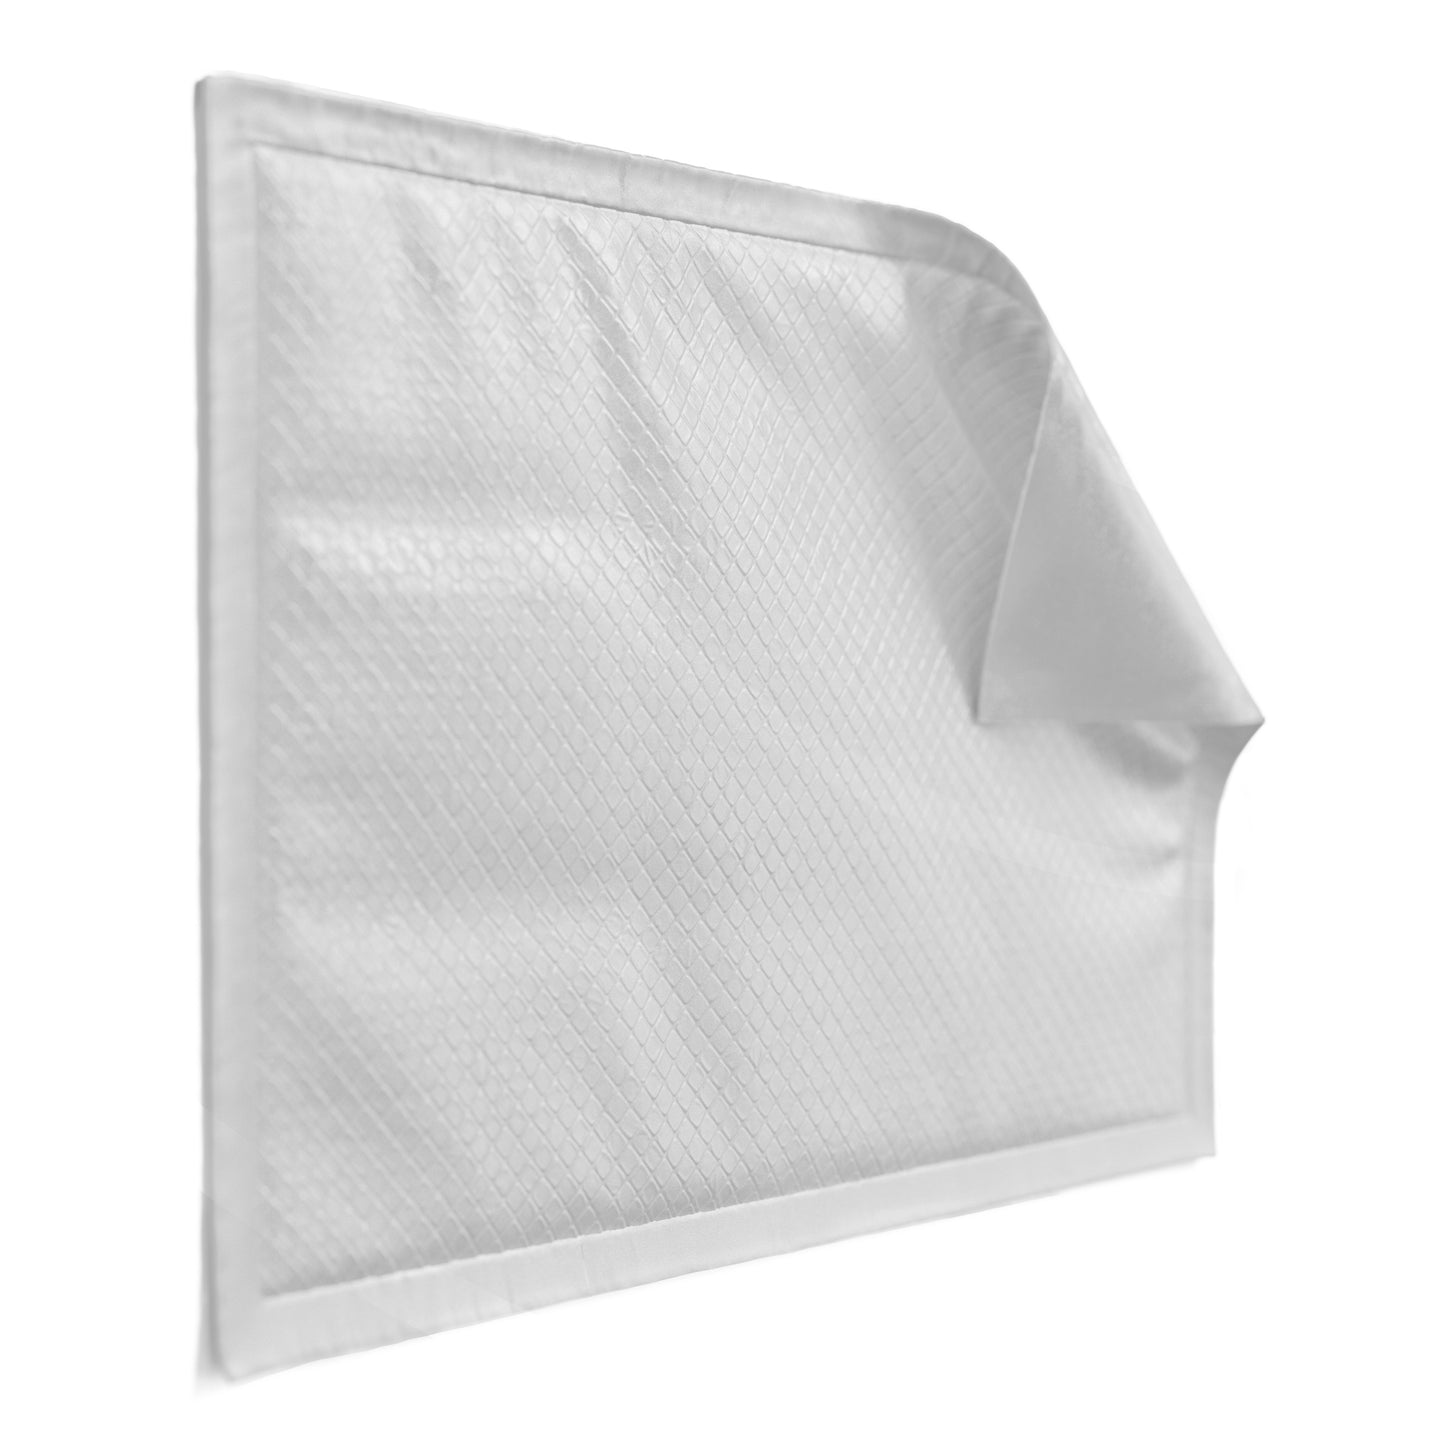 Sensalou Incontinence Bed Pad Disposable - Medical Pads Waterproof 60 x 90 cm 50 Pieces